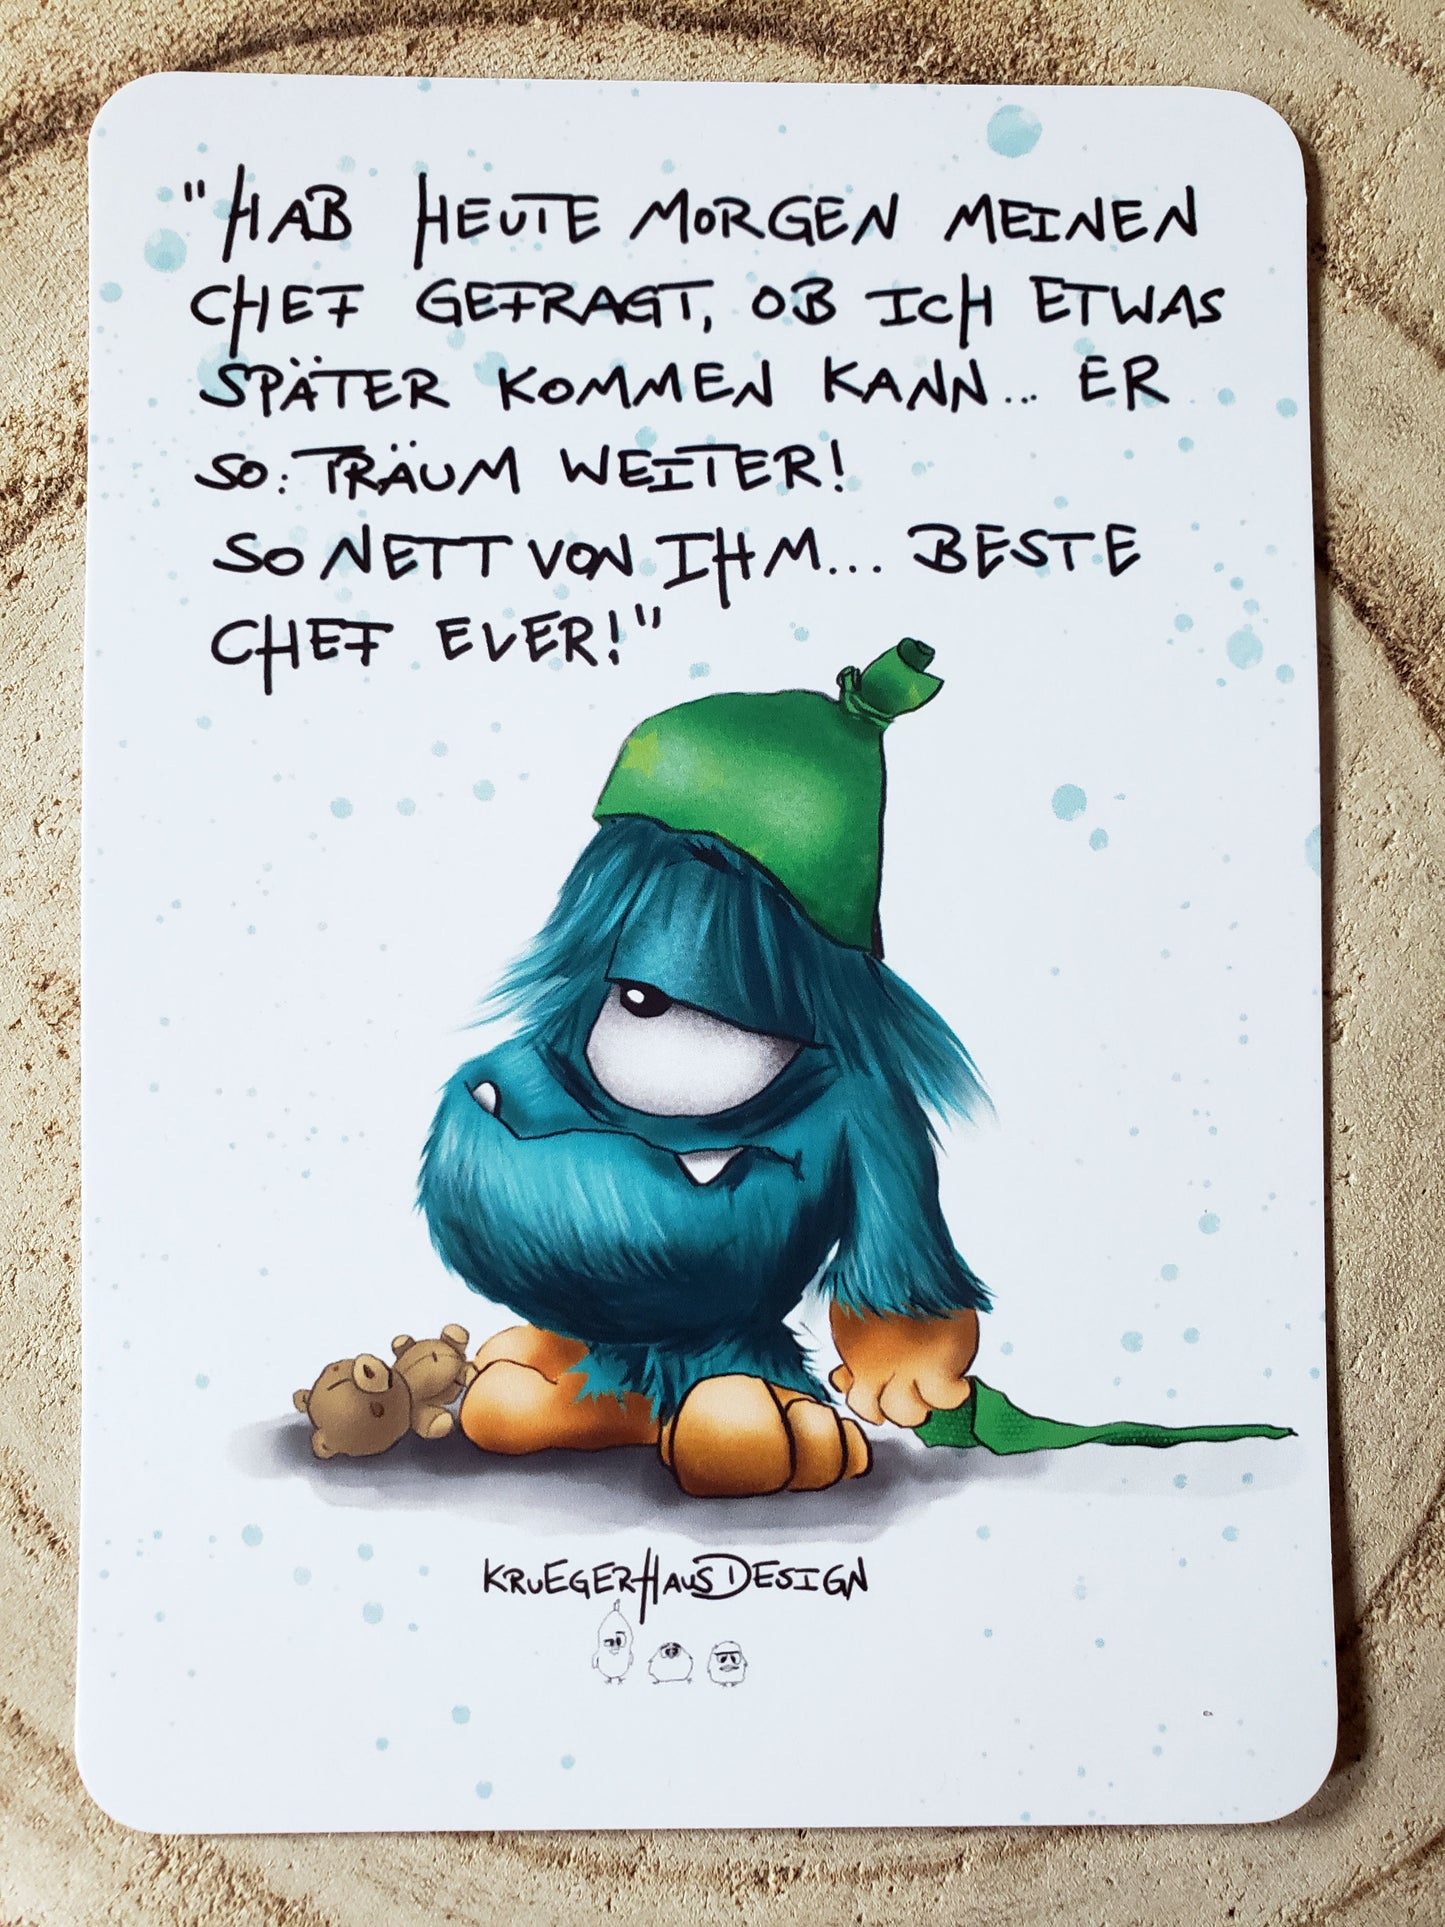 Postkarte Monster Kruegerhausdesign  "Hab heute morgen meinen Chef gefragt..... "